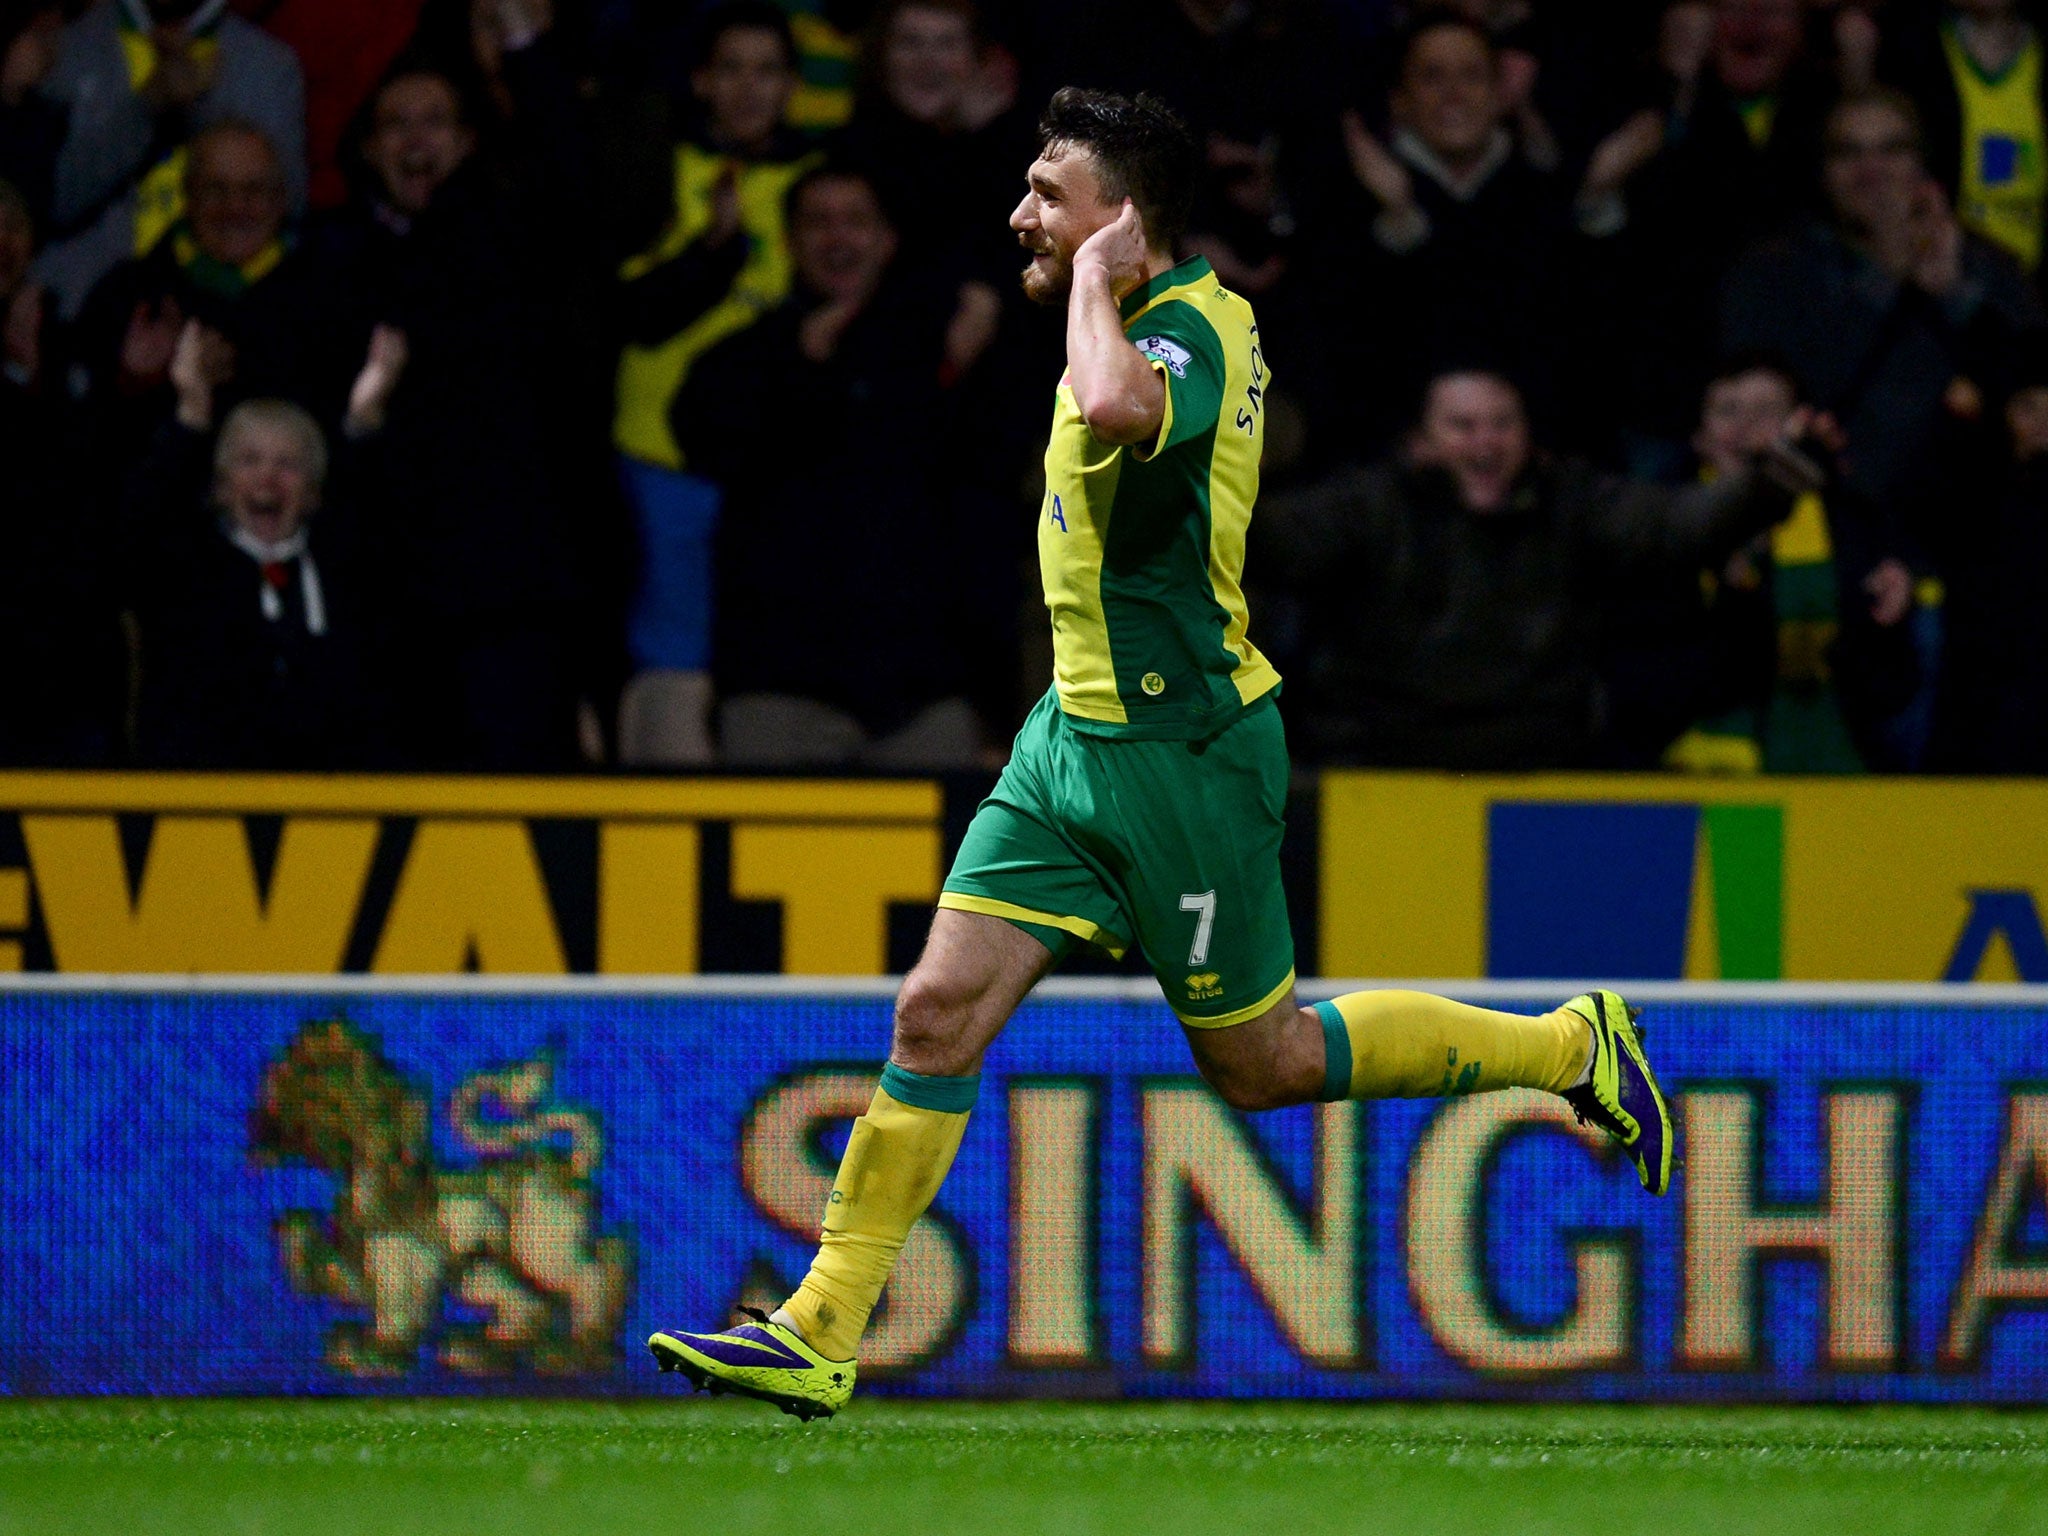 Norwich winger Robert Snodgrass celebrates after scoring against West Ham on Sunday